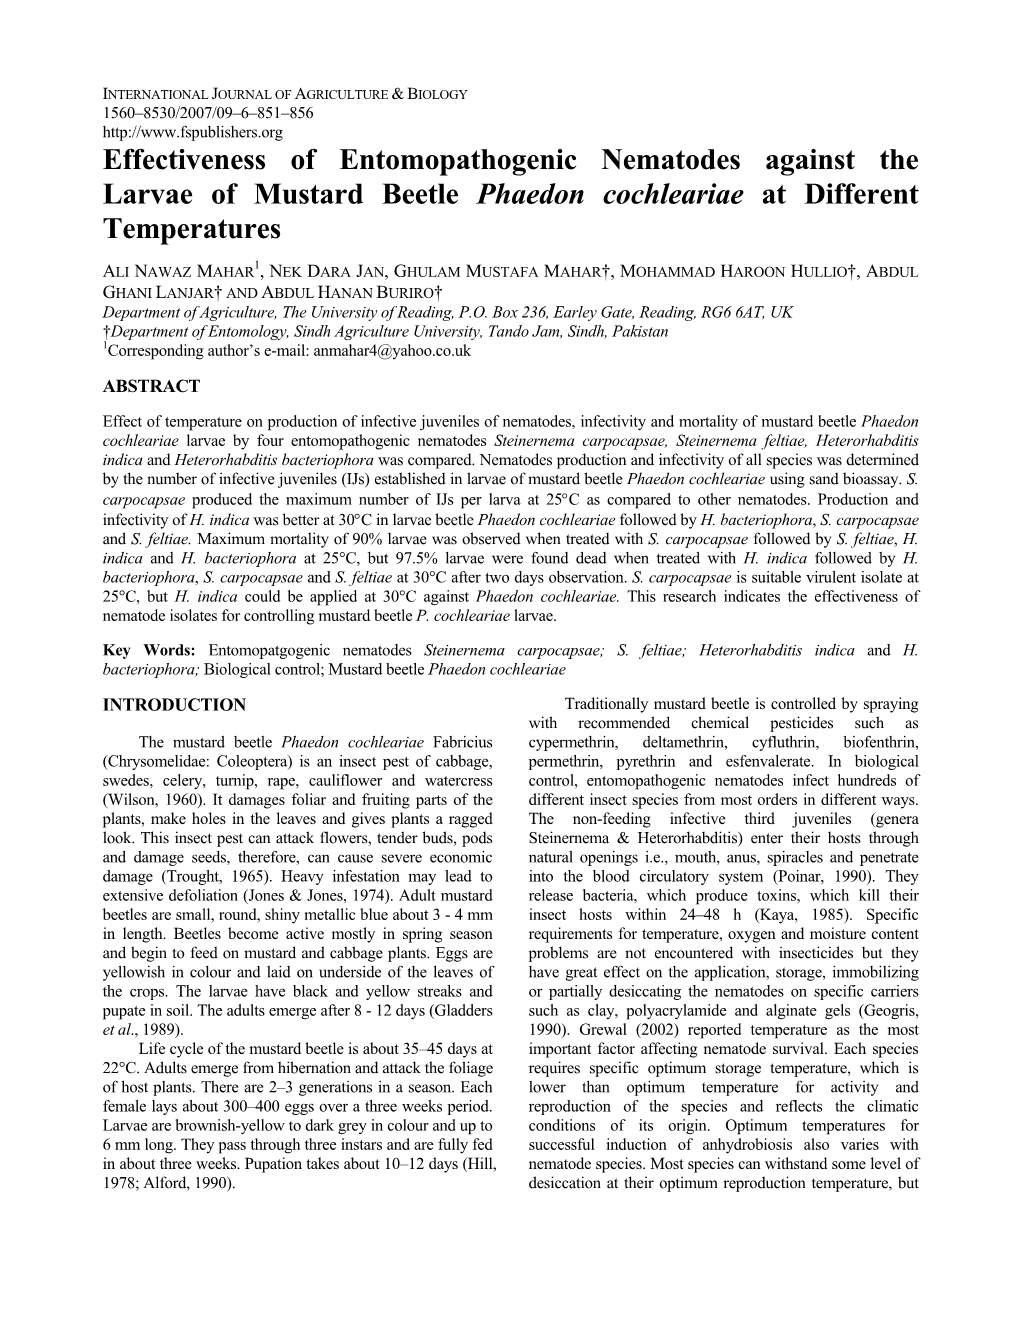 Effectiveness of Entomopathogenic Nematodes Against the Larvae of Mustard Beetle Phaedon Cochleariae at Different Temperatures